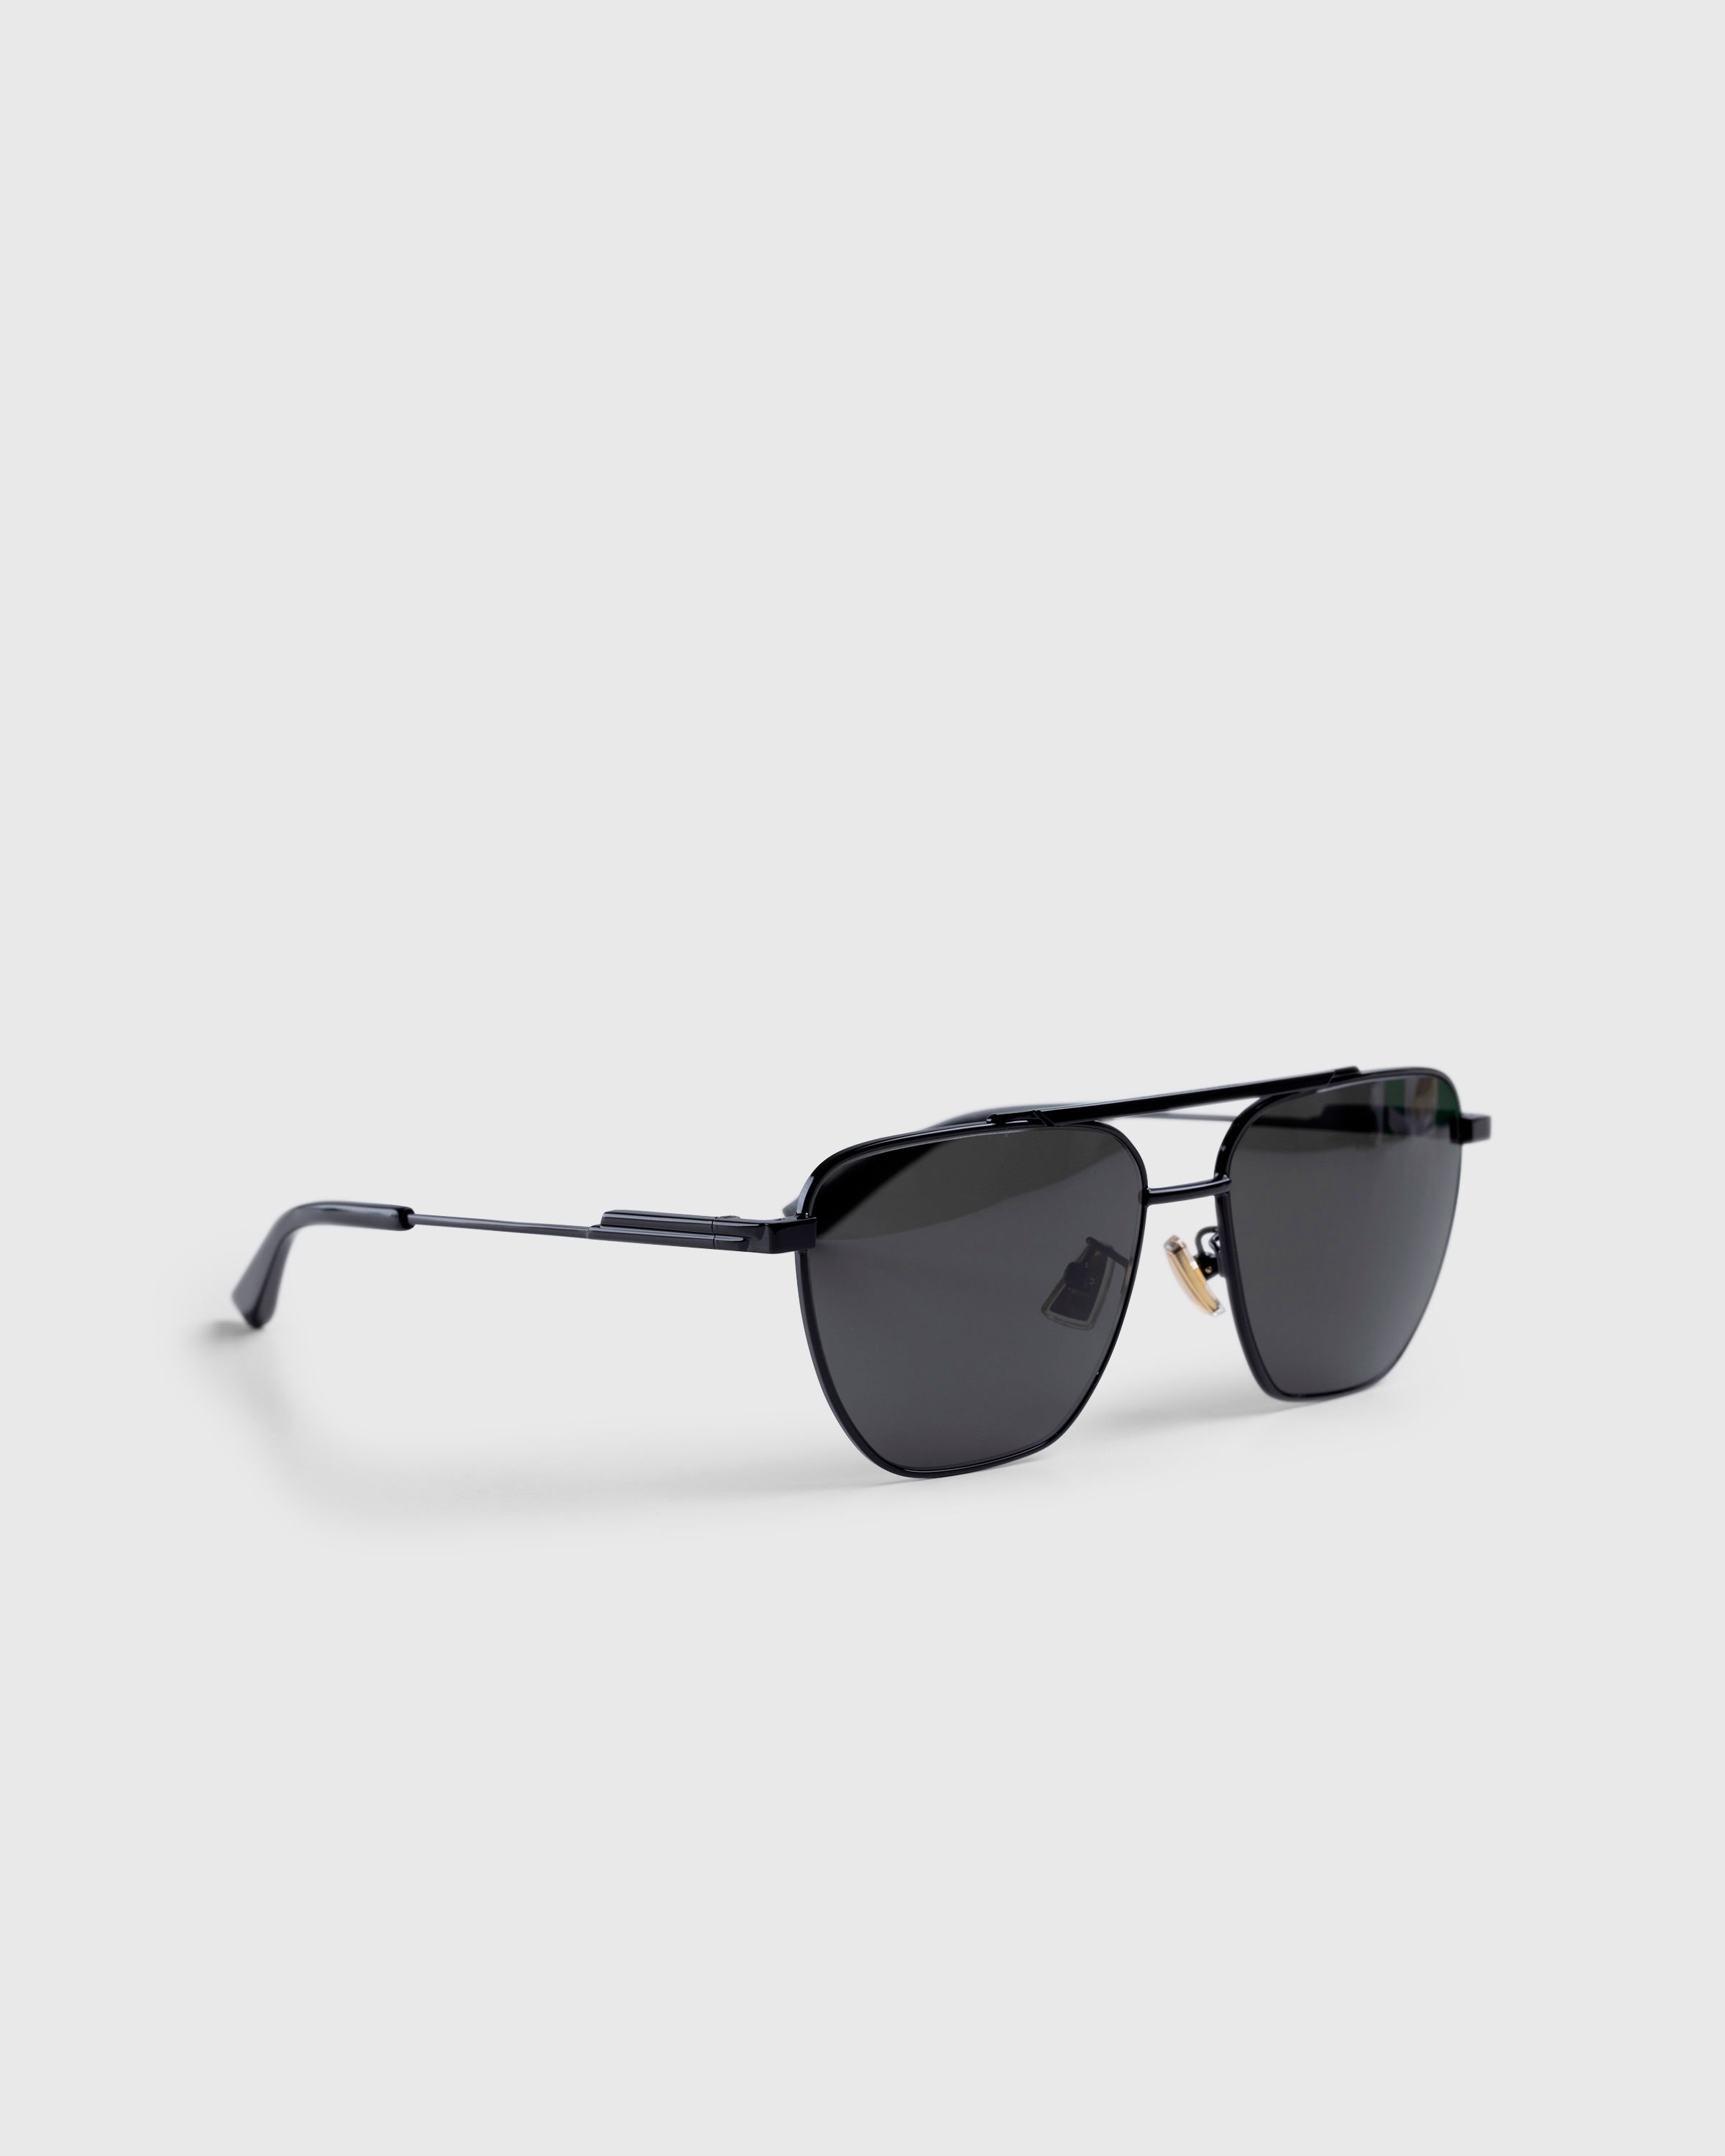 Bottega Veneta - Pilot Square Frame Sunglasses Black - Accessories - Black - Image 2